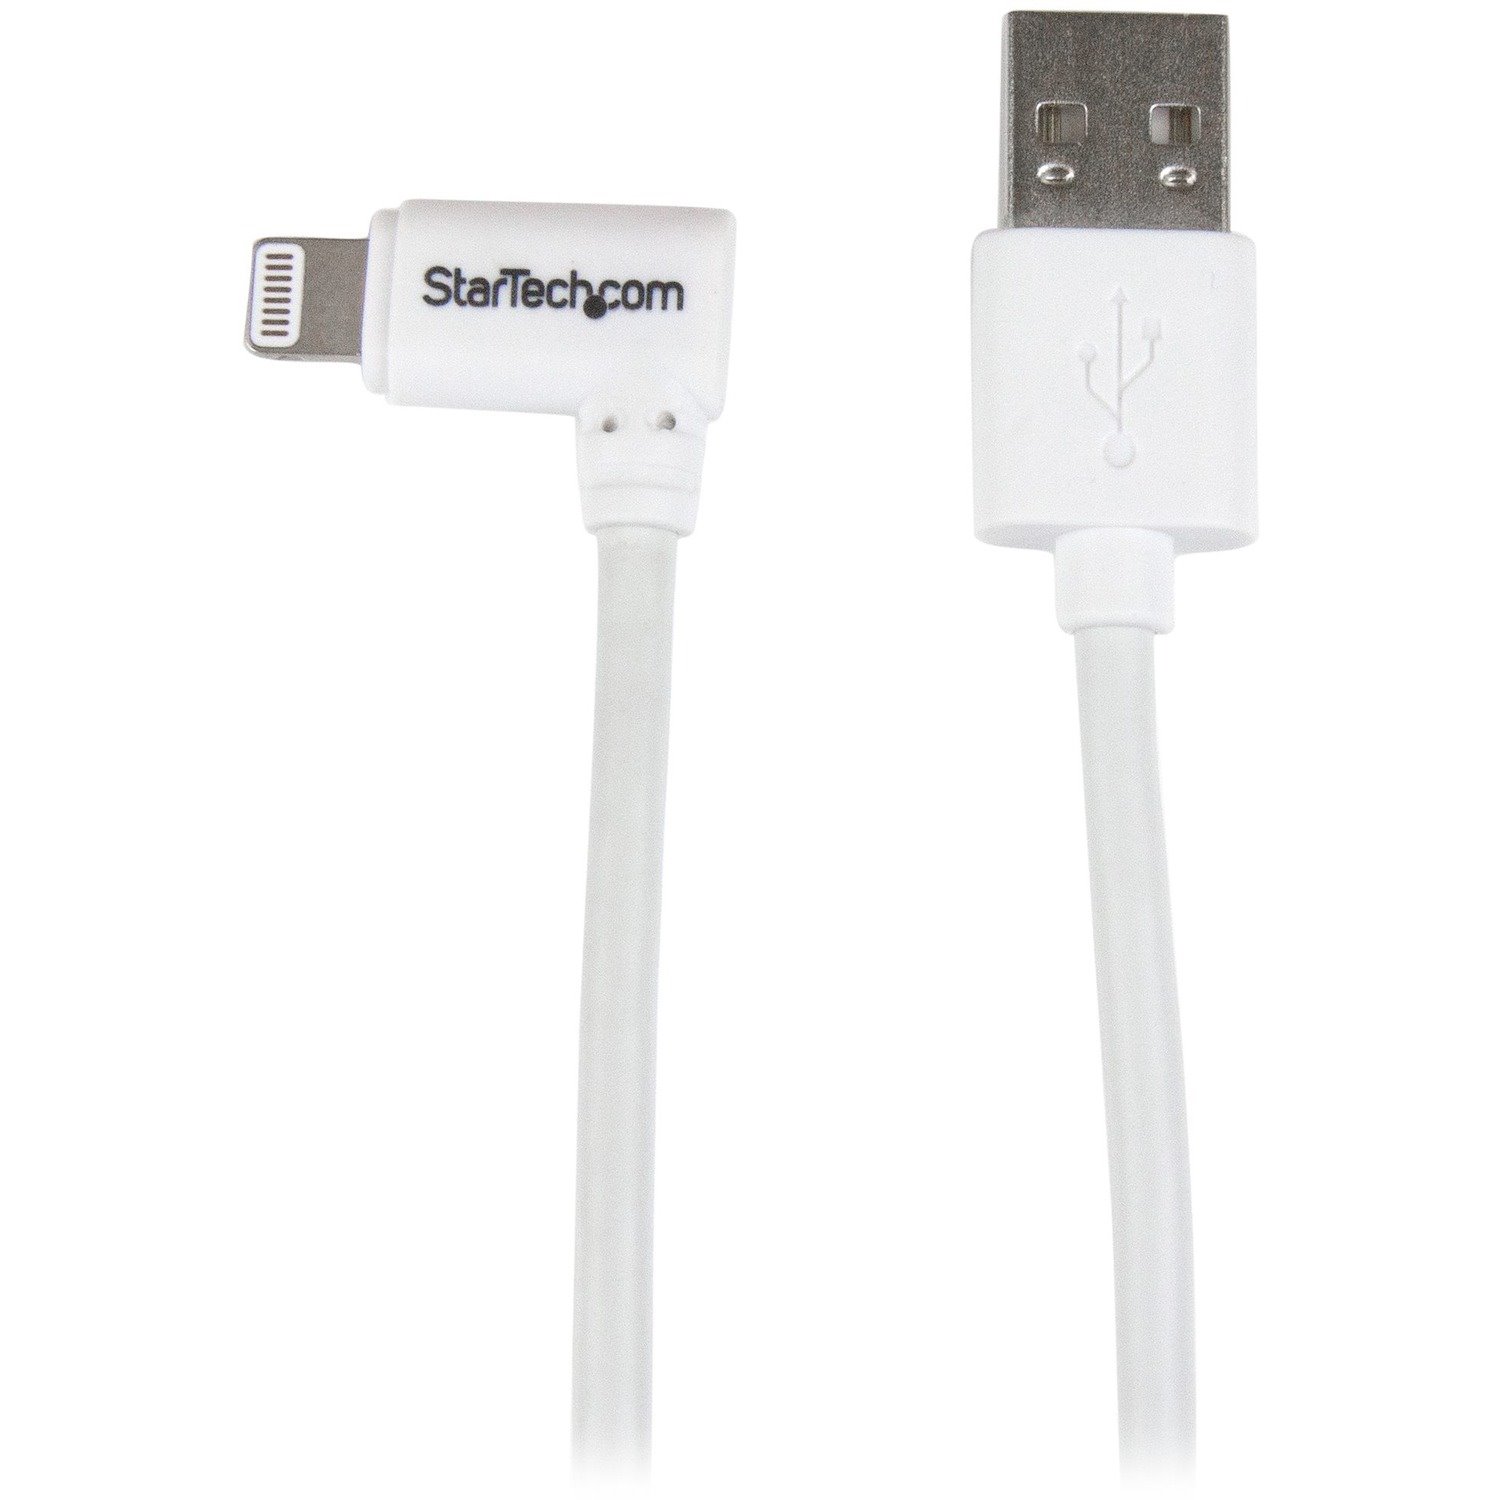 StarTech.com 1m 3 ft Angled Lightning to USB Cable - White - Angled Lightning Cable for iPhone / iPod / iPad